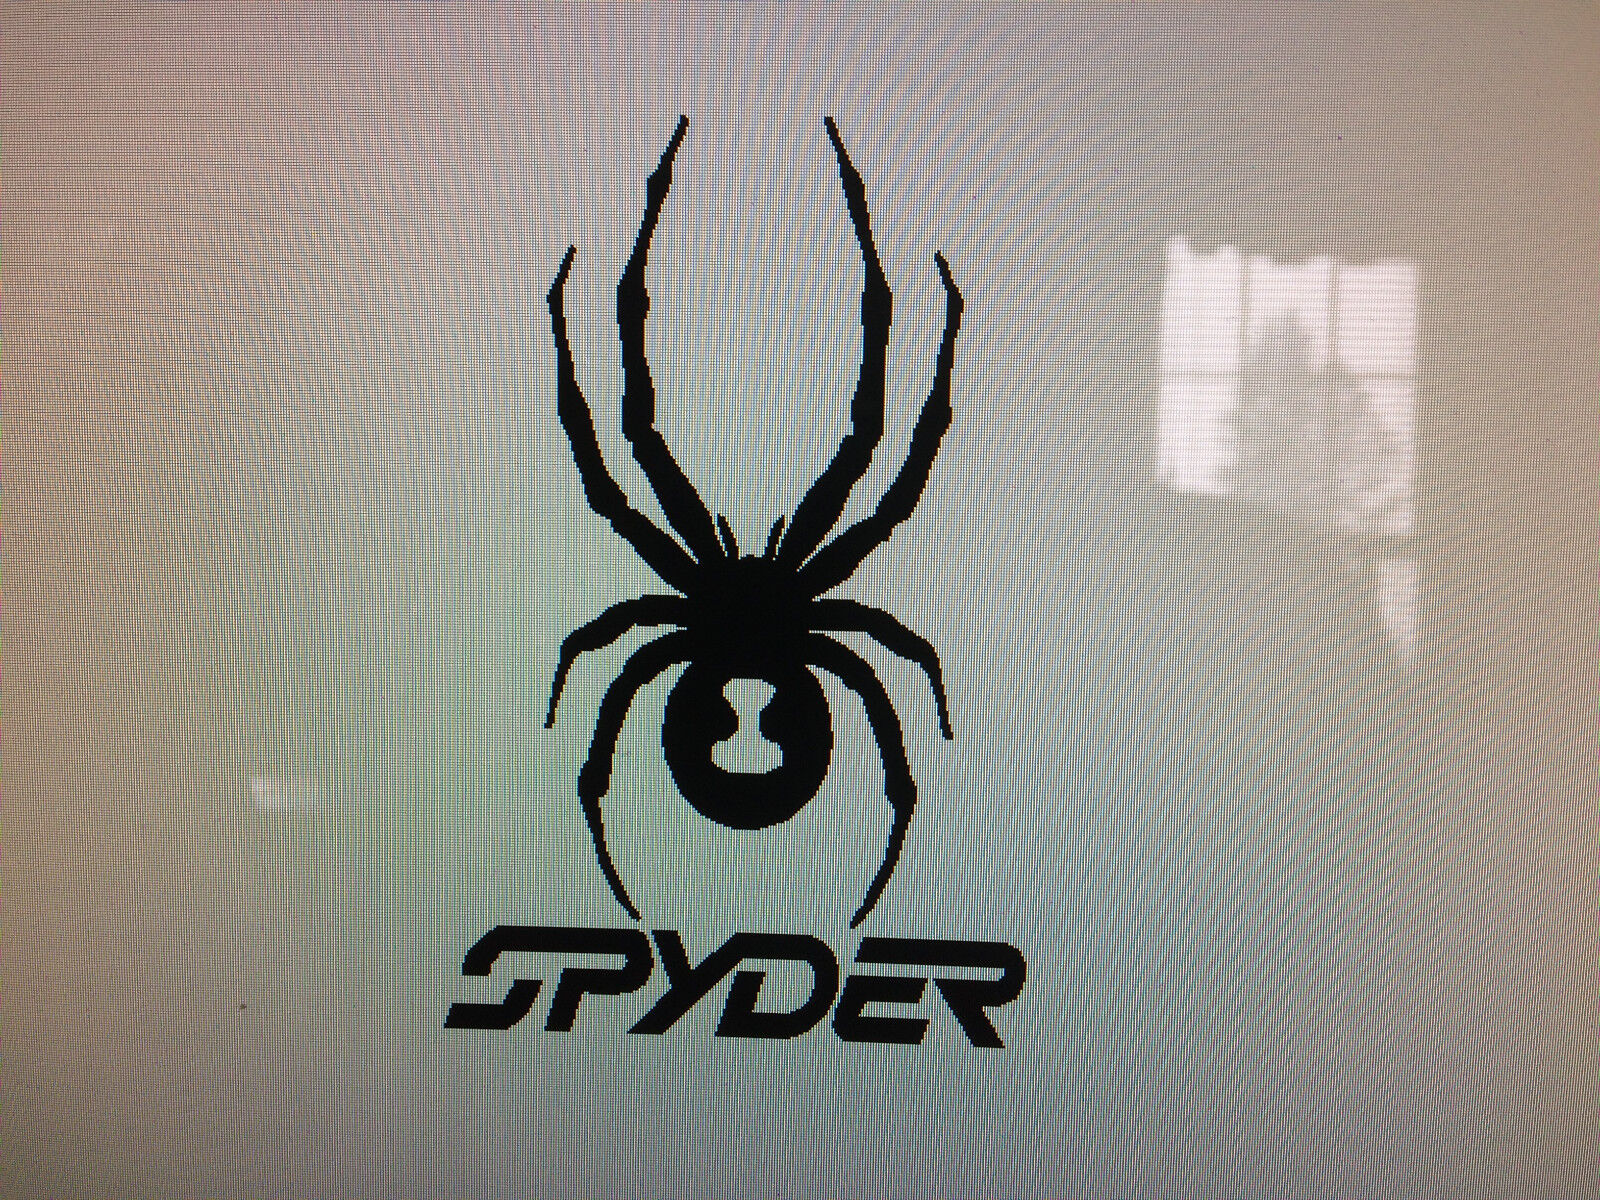     2 SPYDER  Logo-Vinyl-Decal-Car-Truck-Window-Sticker